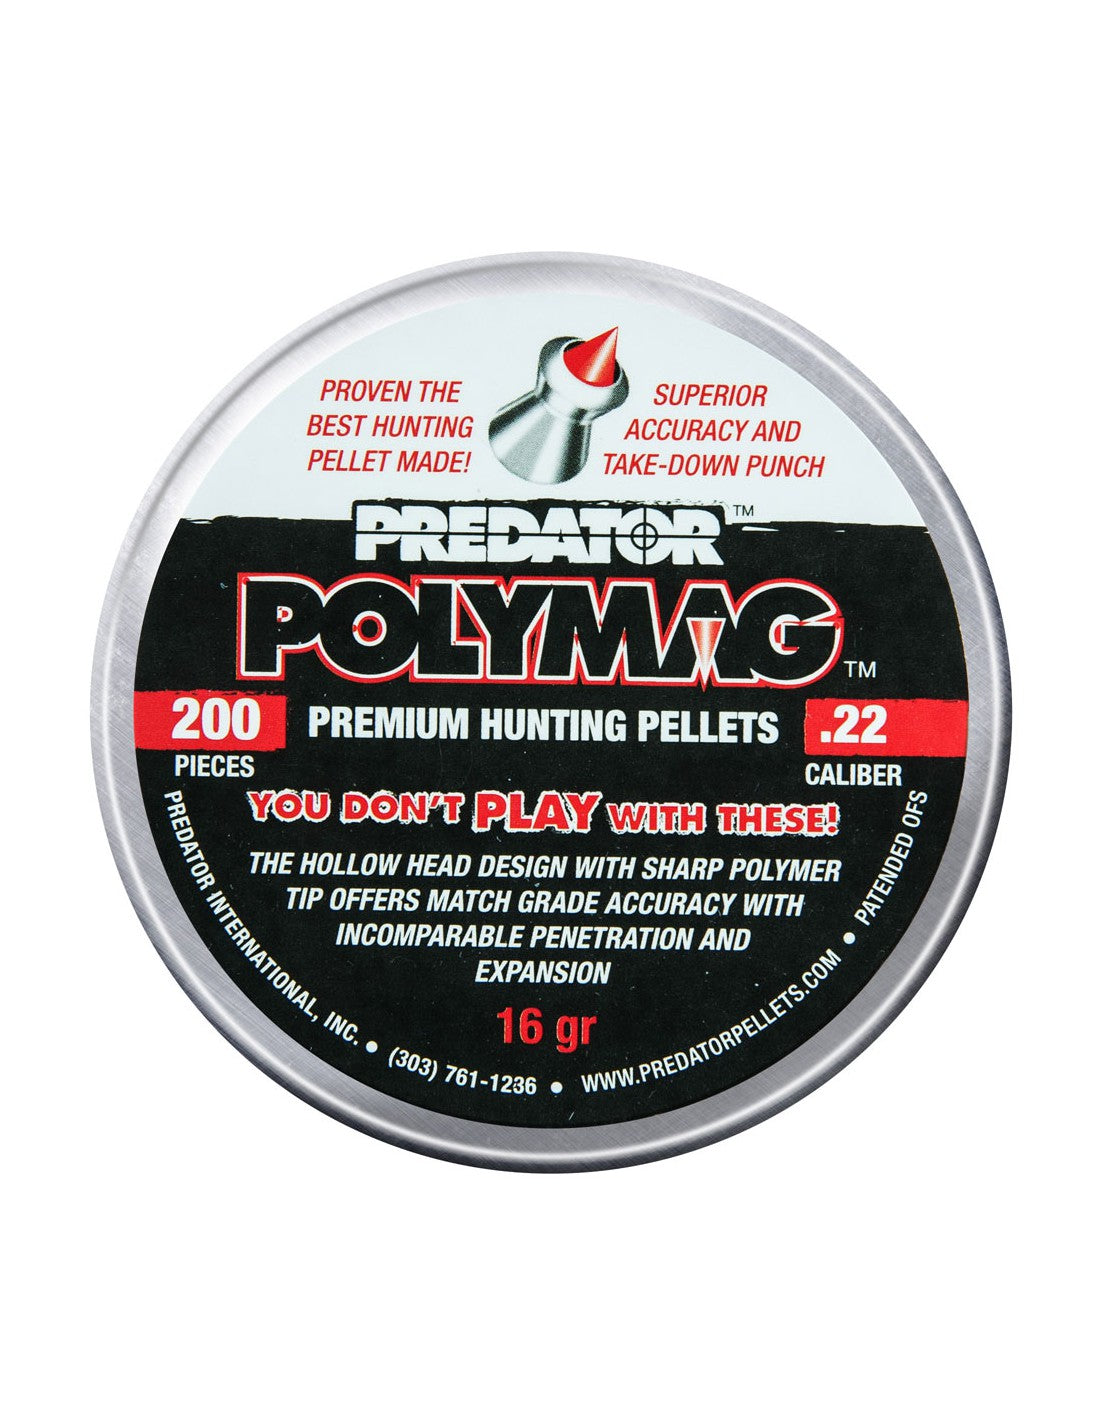 Predator Polymag pellets